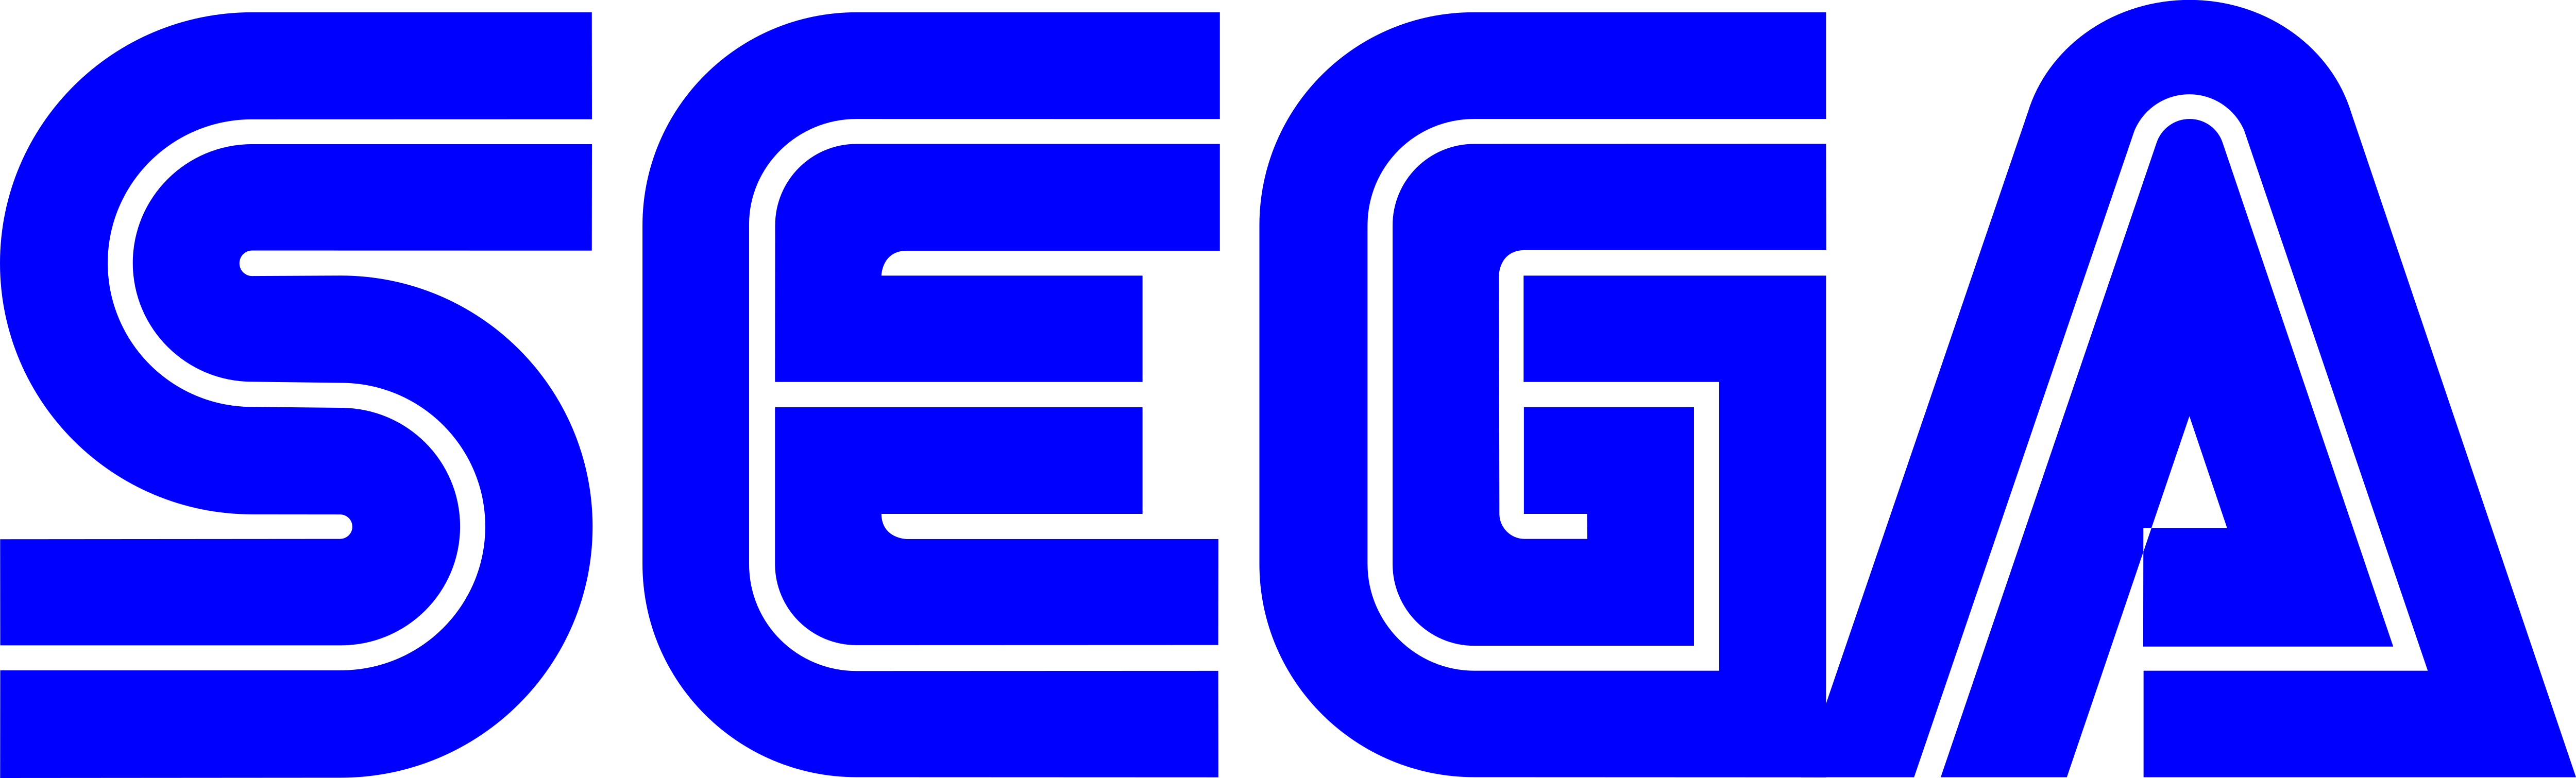 Collection of Sega Logo PNG. | PlusPNG